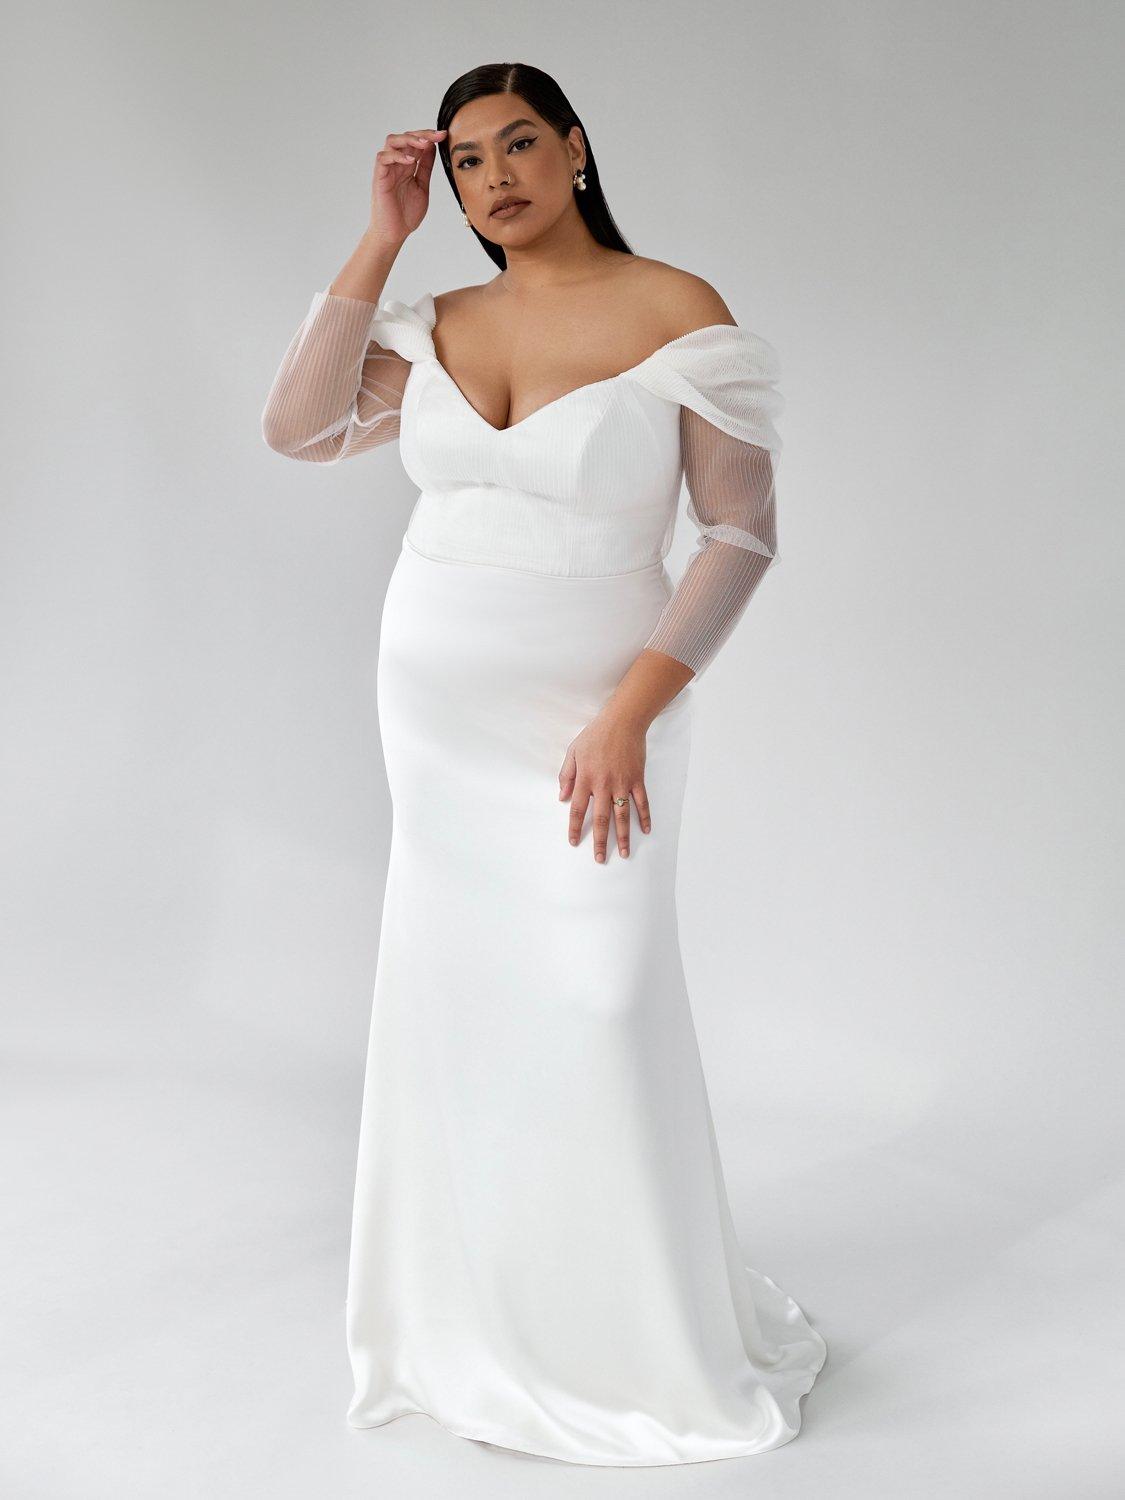 Plus Size Bridal Fashion: 20 Curvy Brides In Stunning Designer